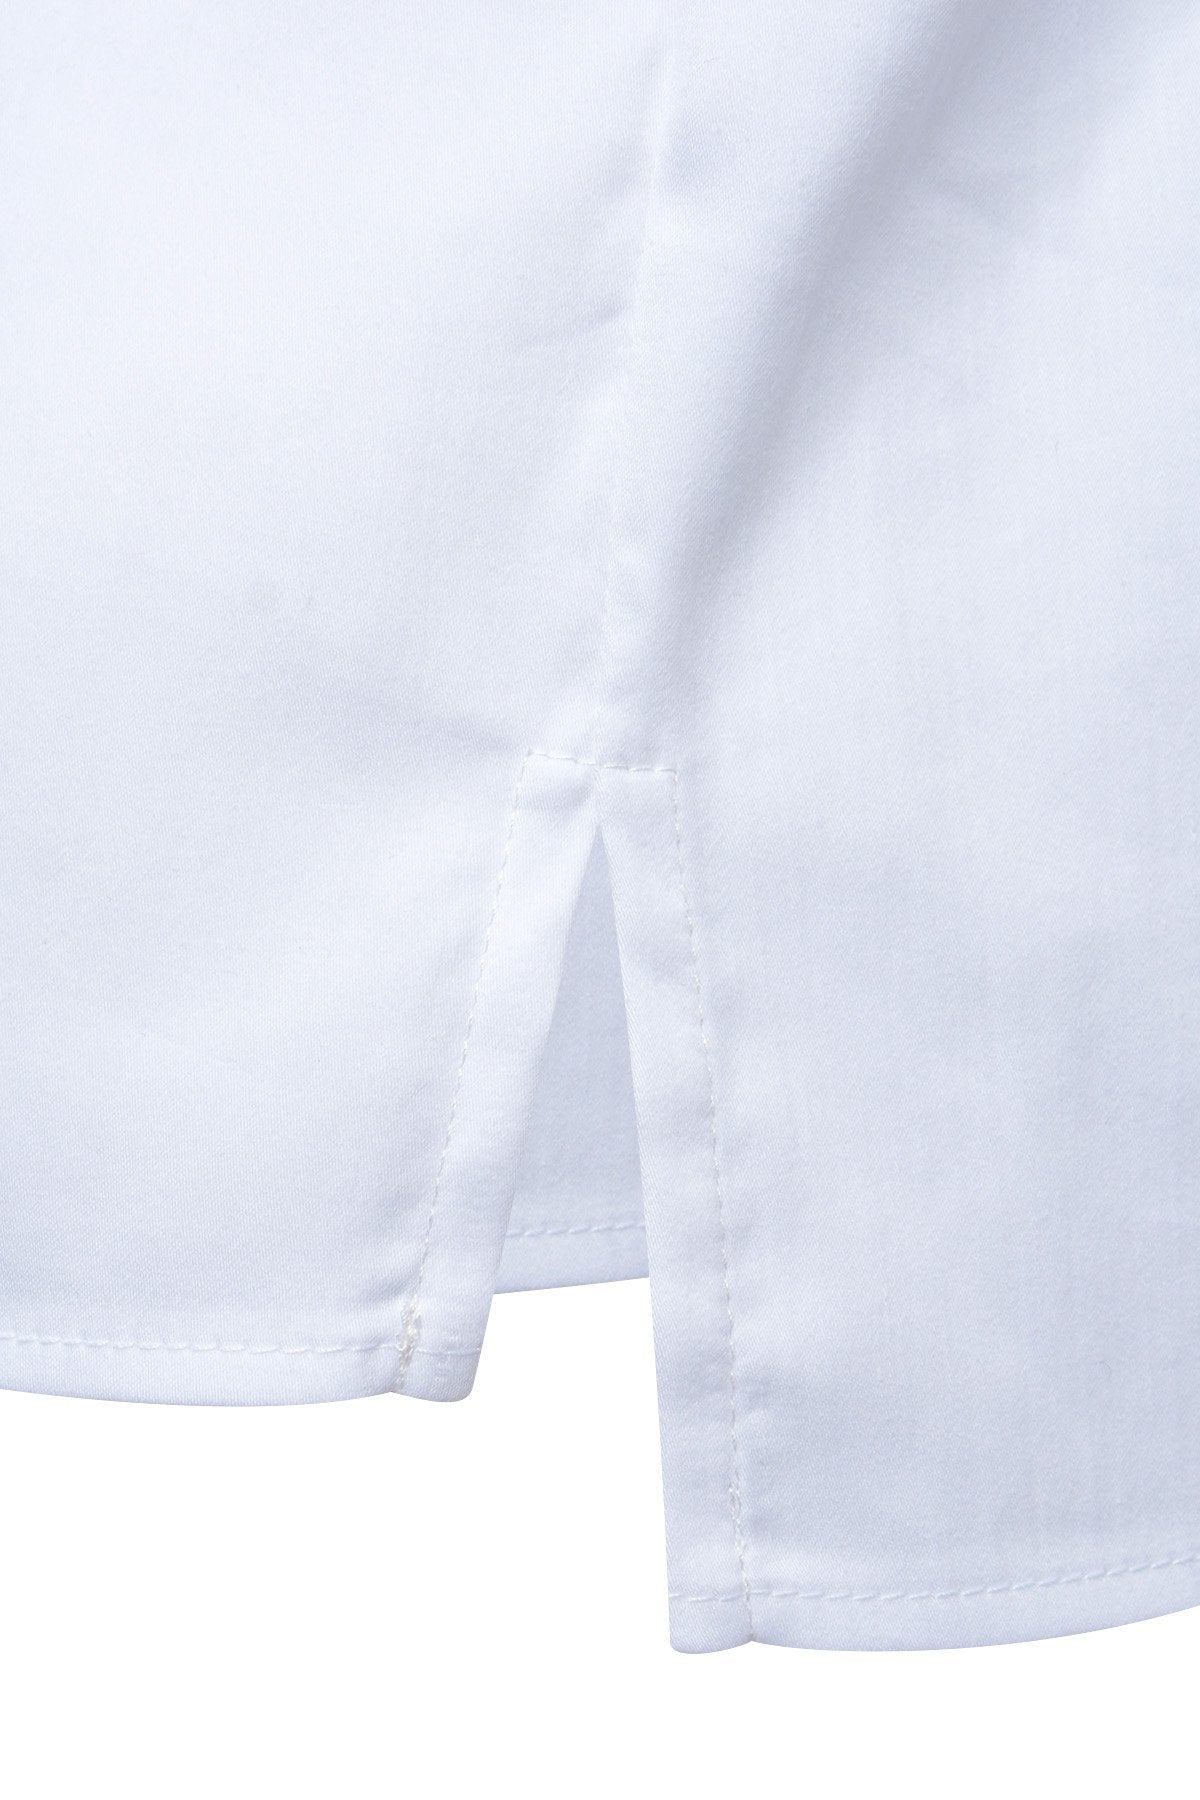 Short Shirt Collar Blouse (White)